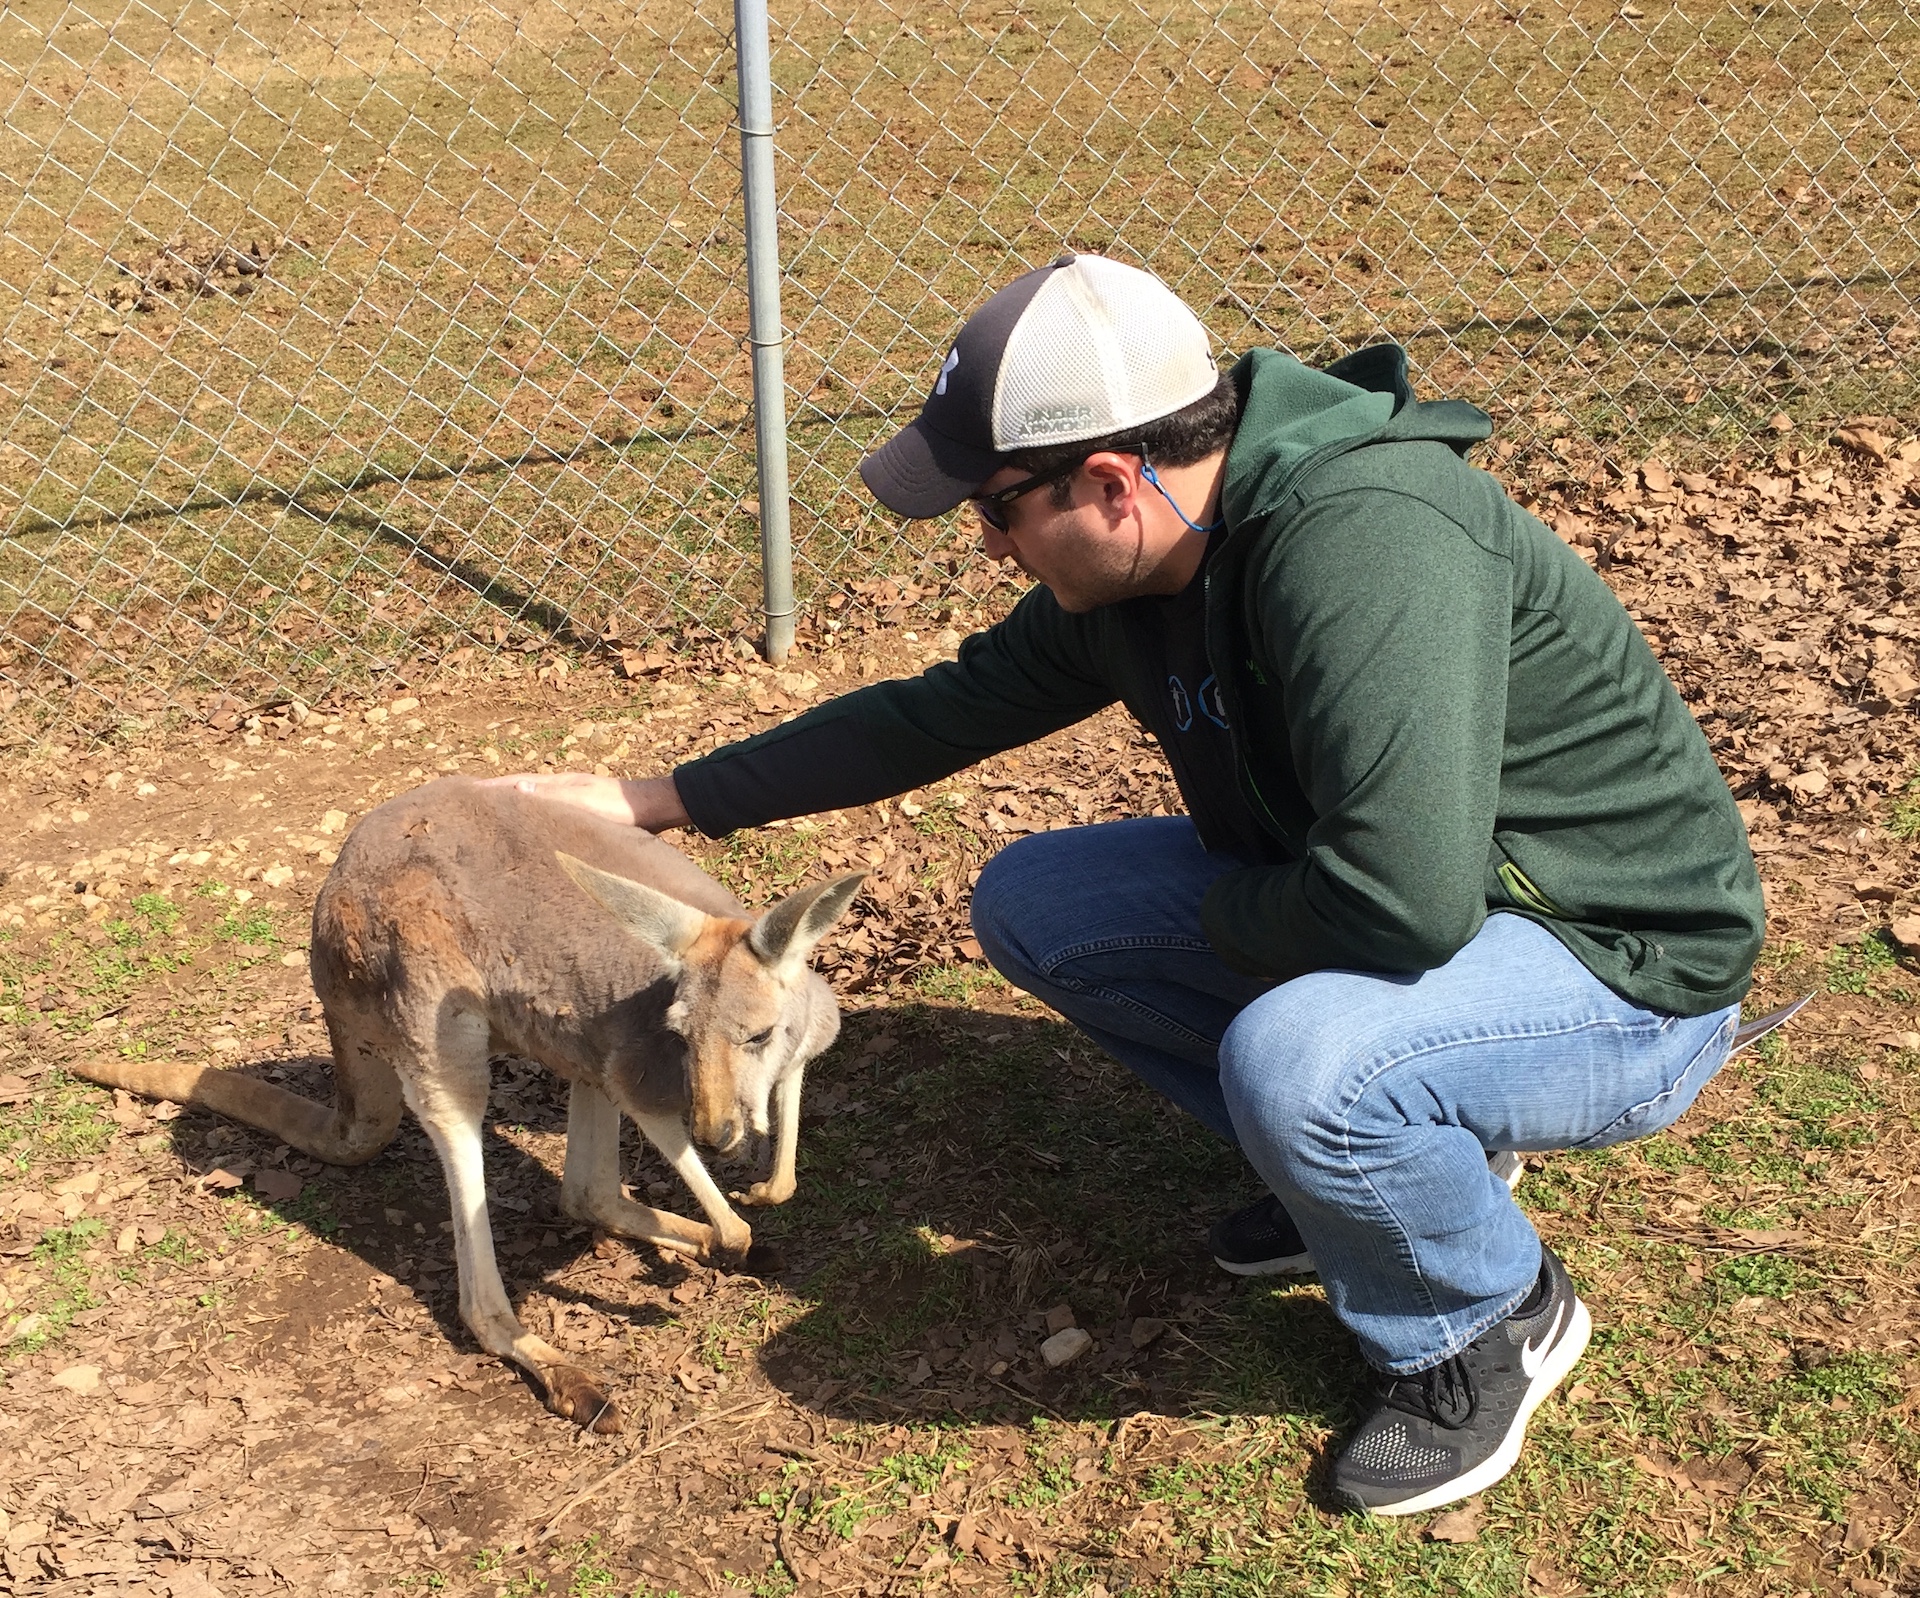 Kentucky Down Under - pet a kangaroo